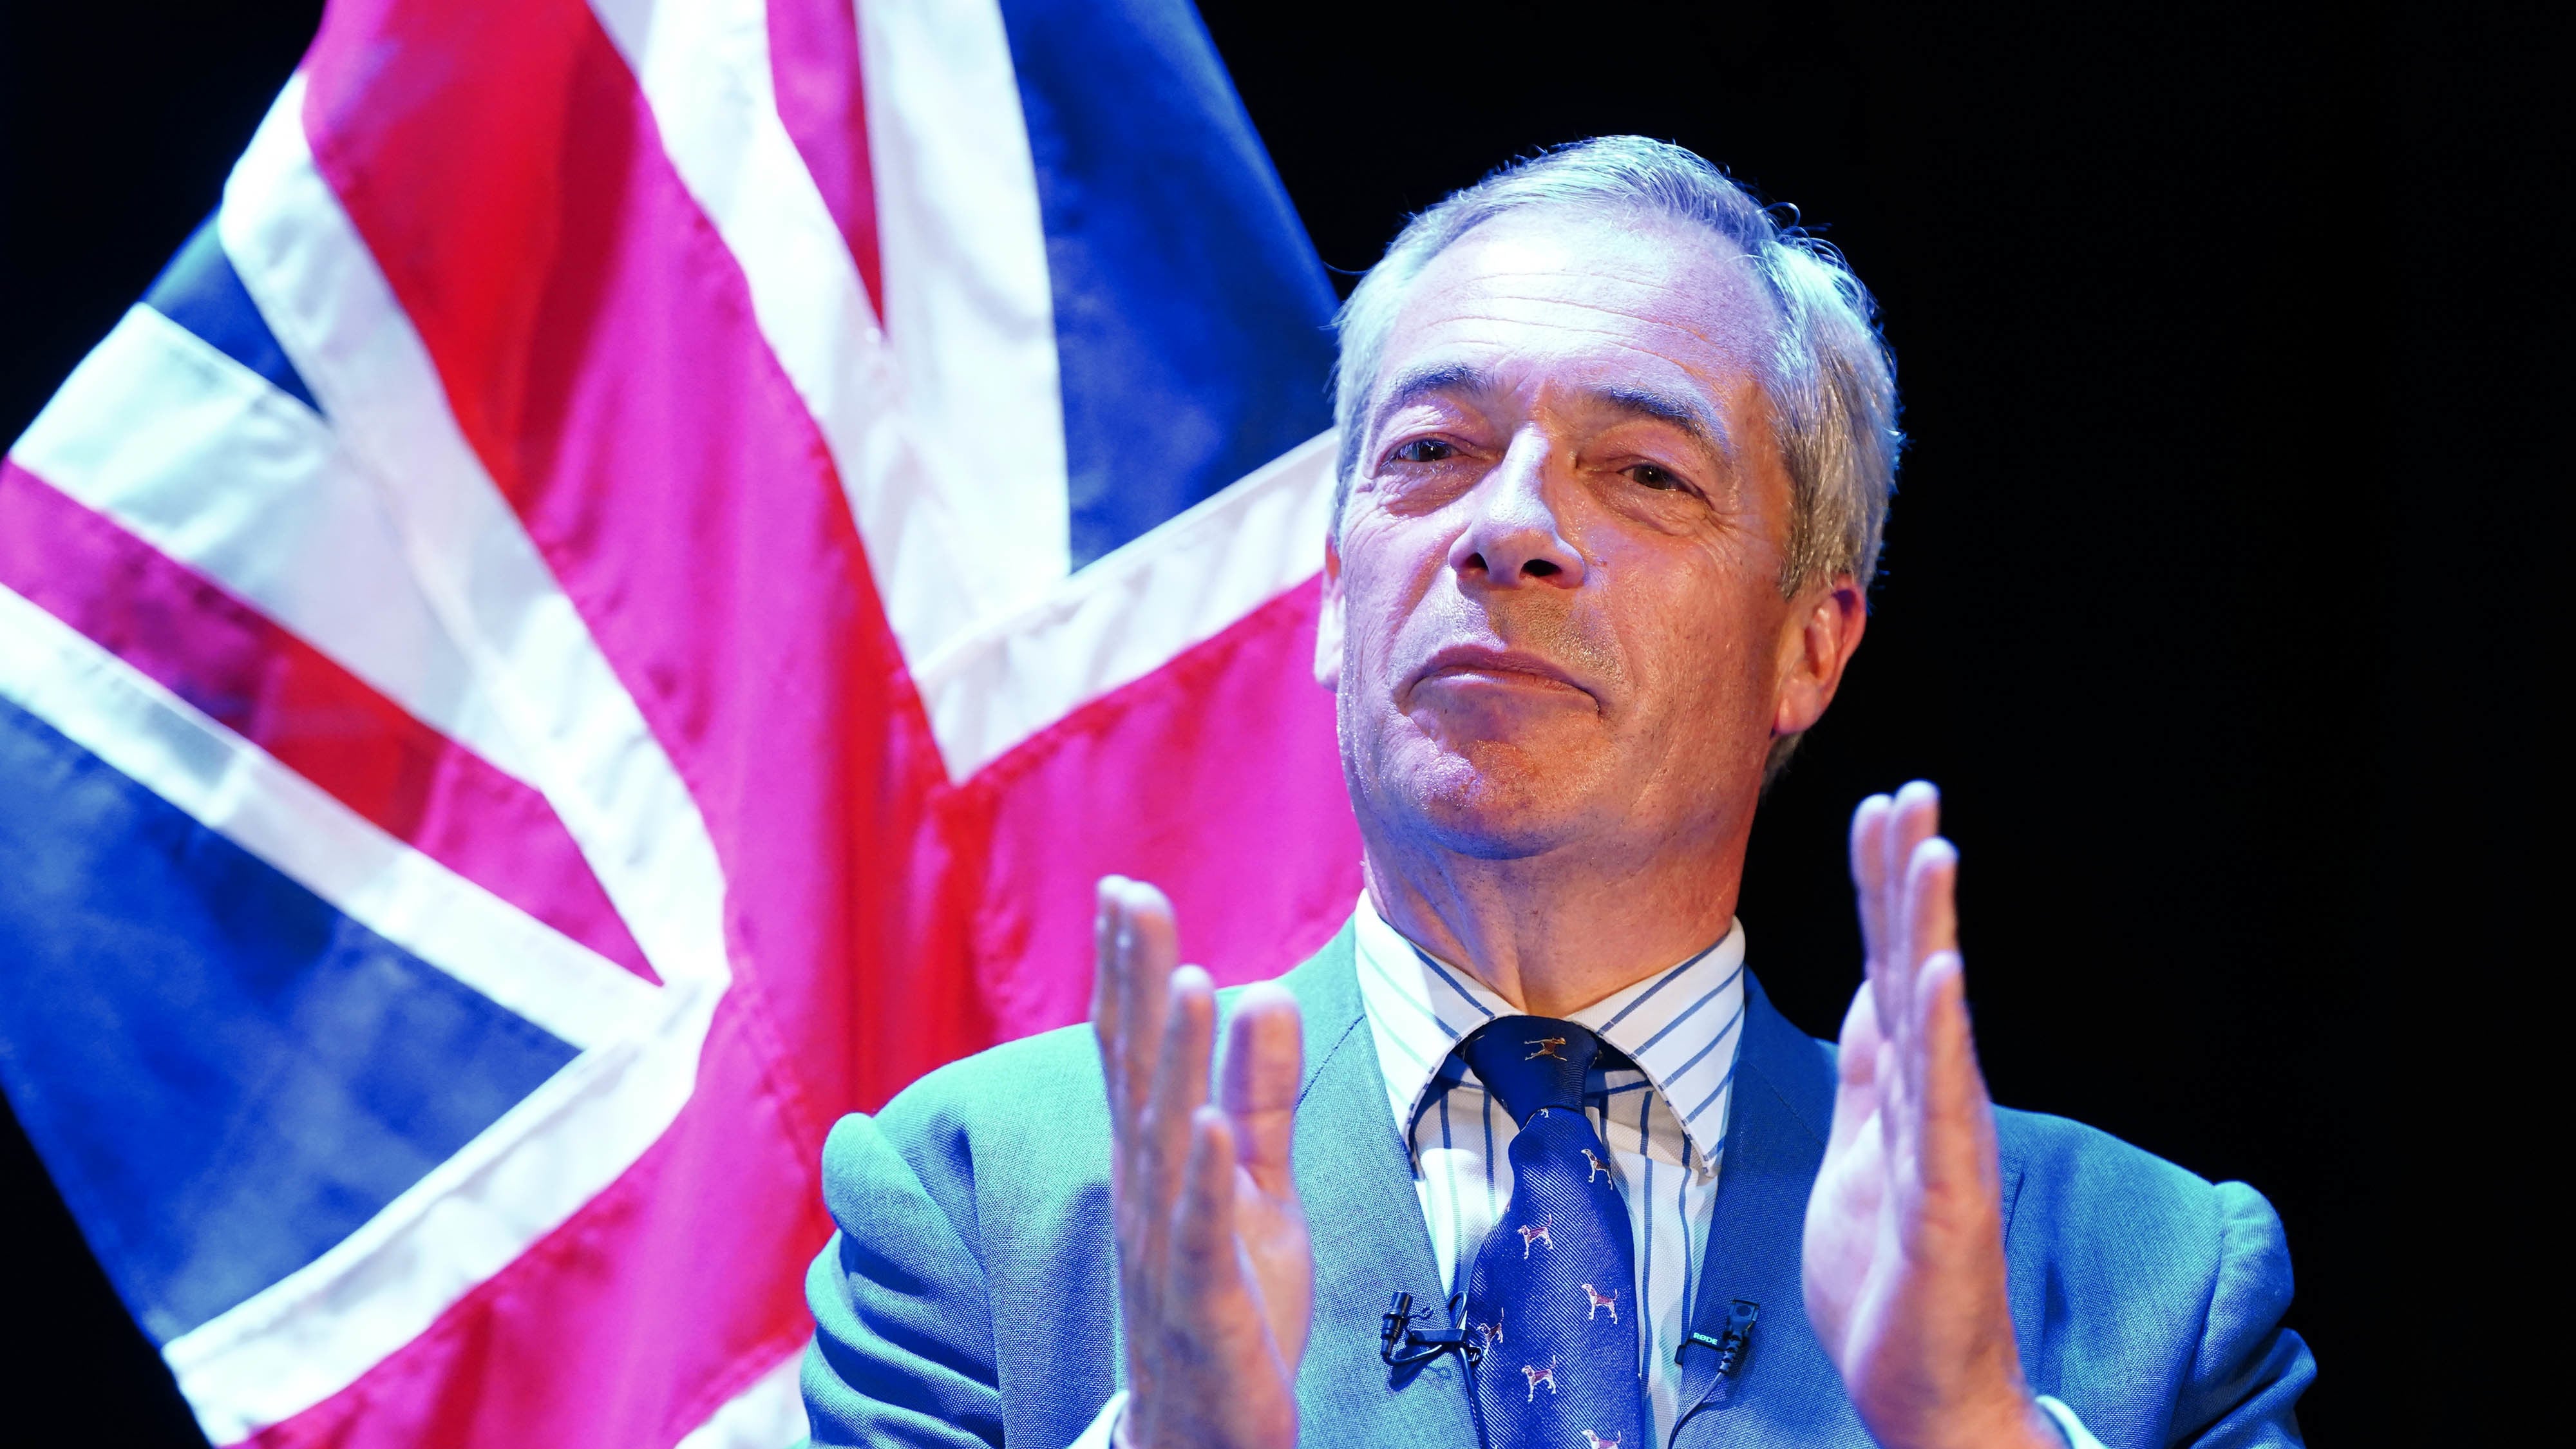 Reform UK leader Nigel Farage speaking at Princes Theatre in Clacton